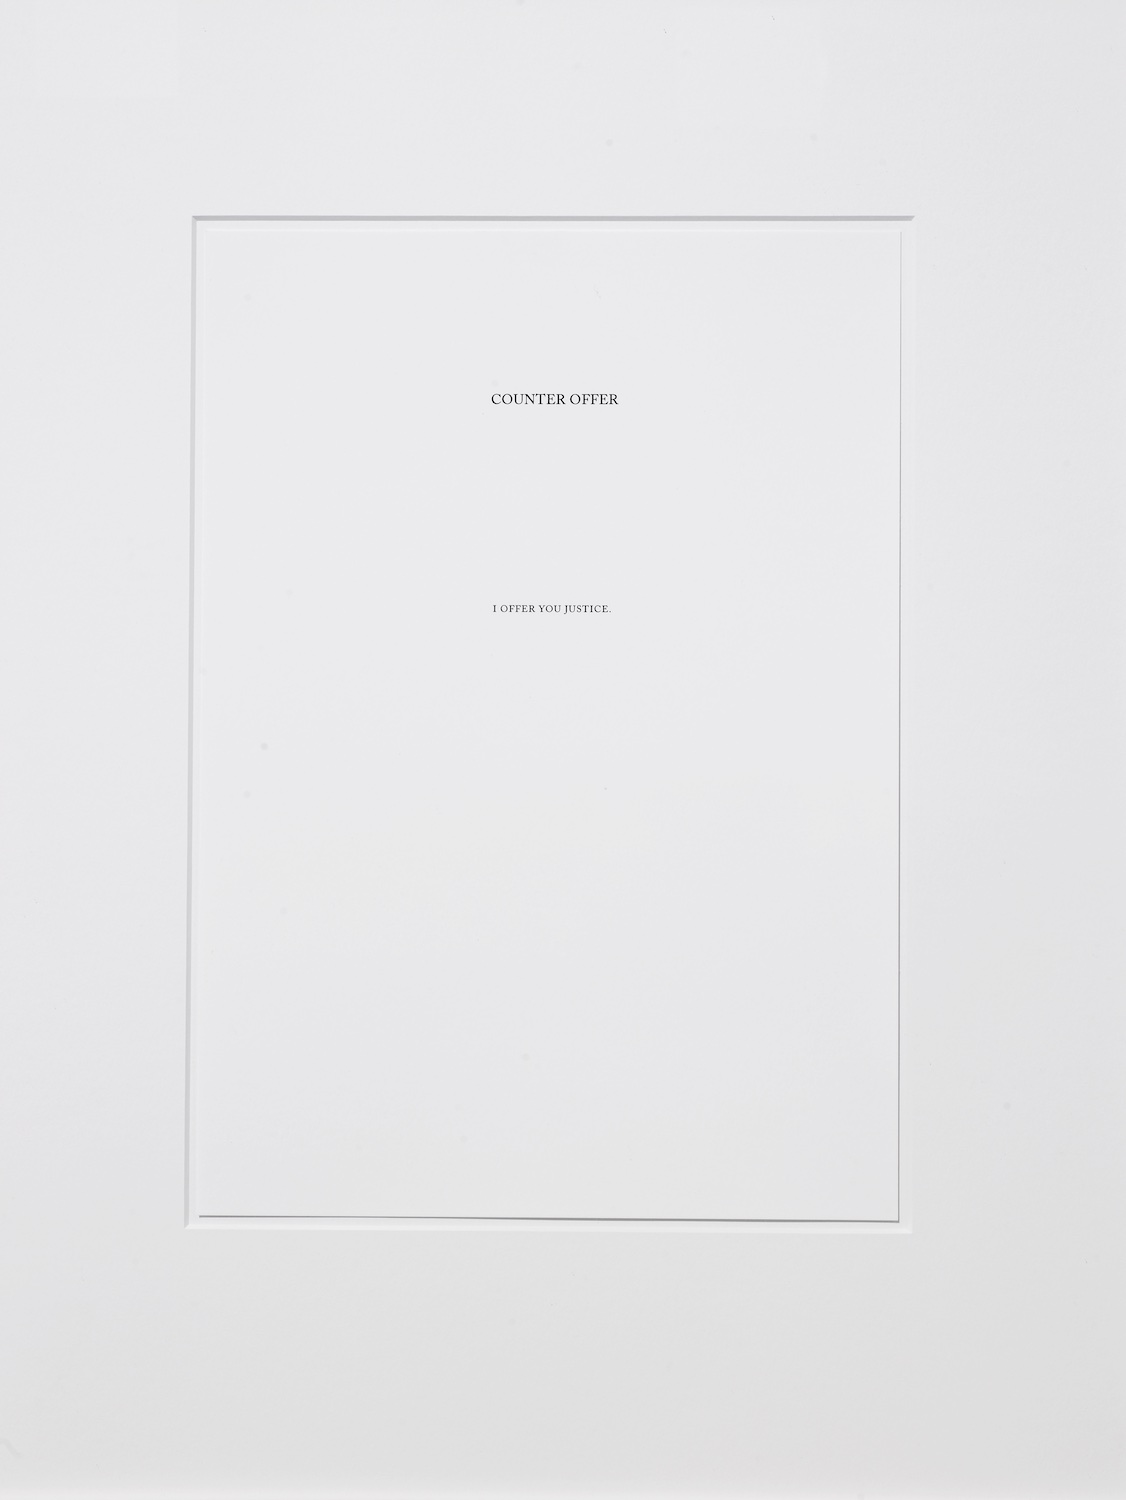   Counter Offer, &nbsp;Carey Young,&nbsp;2008,&nbsp;Archival inkjet print,&nbsp;2 parts, each 21 x 29 cm 